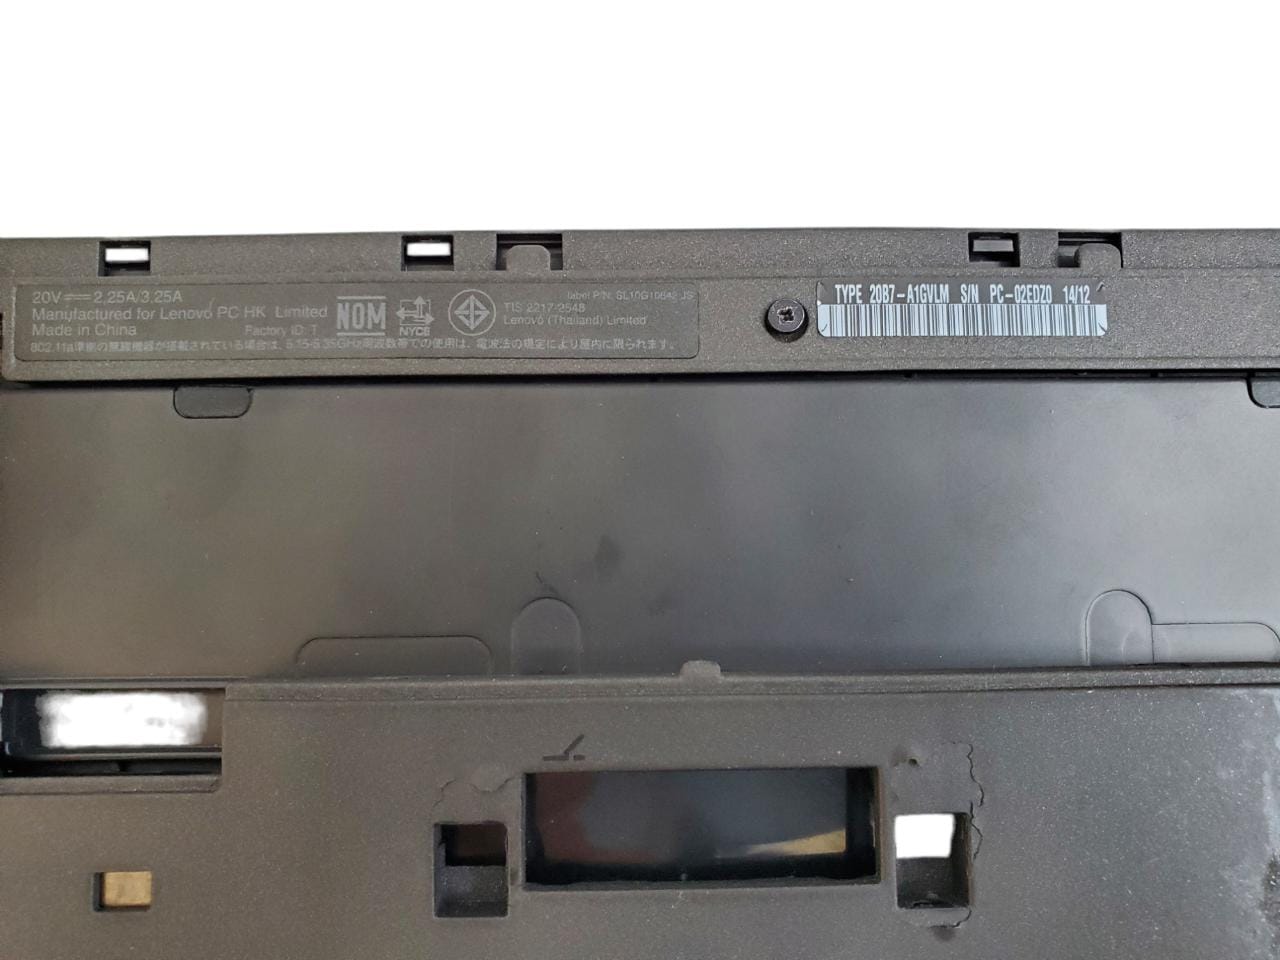 Carcasa Base Inferior y Palmrest de Laptop Lenovo T440 (Producto usado)